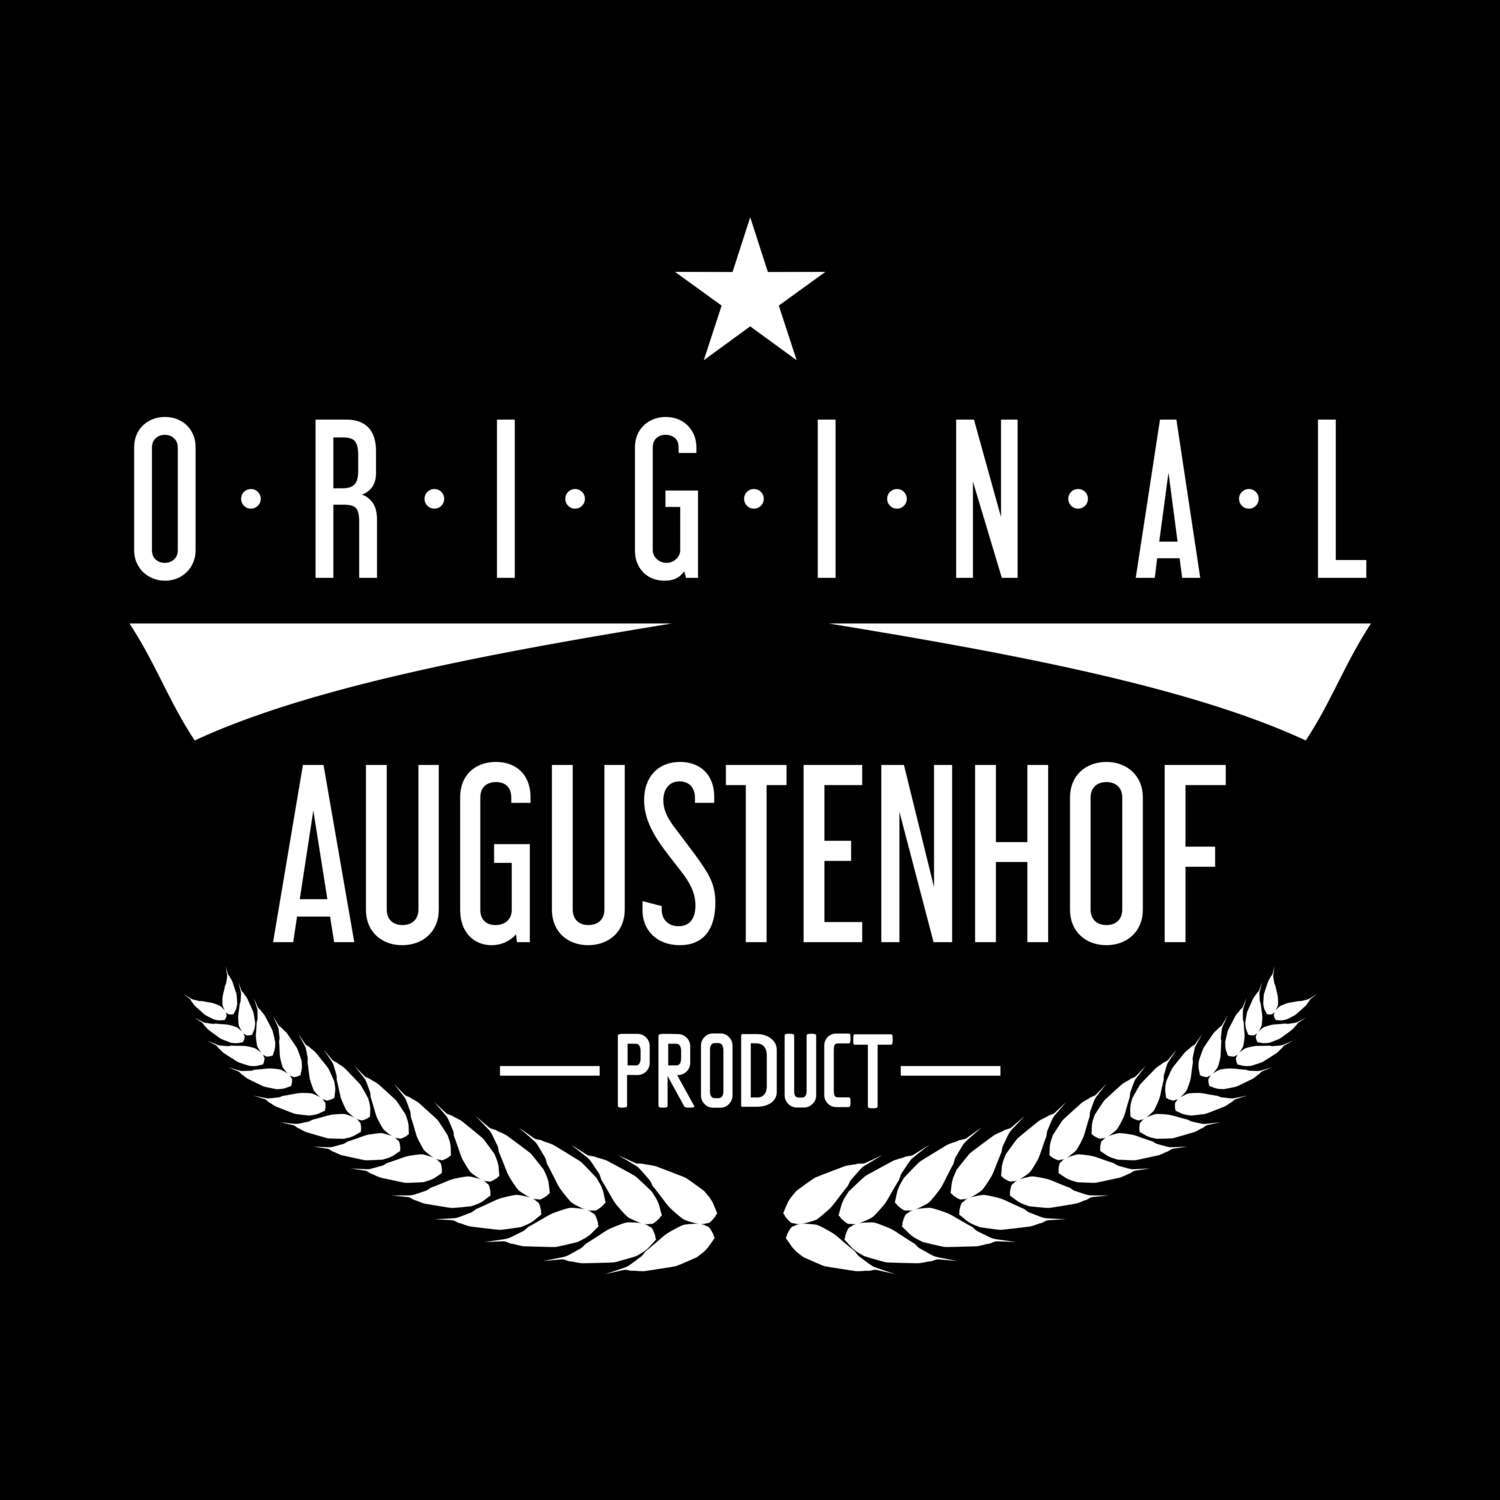 Augustenhof T-Shirt »Original Product«